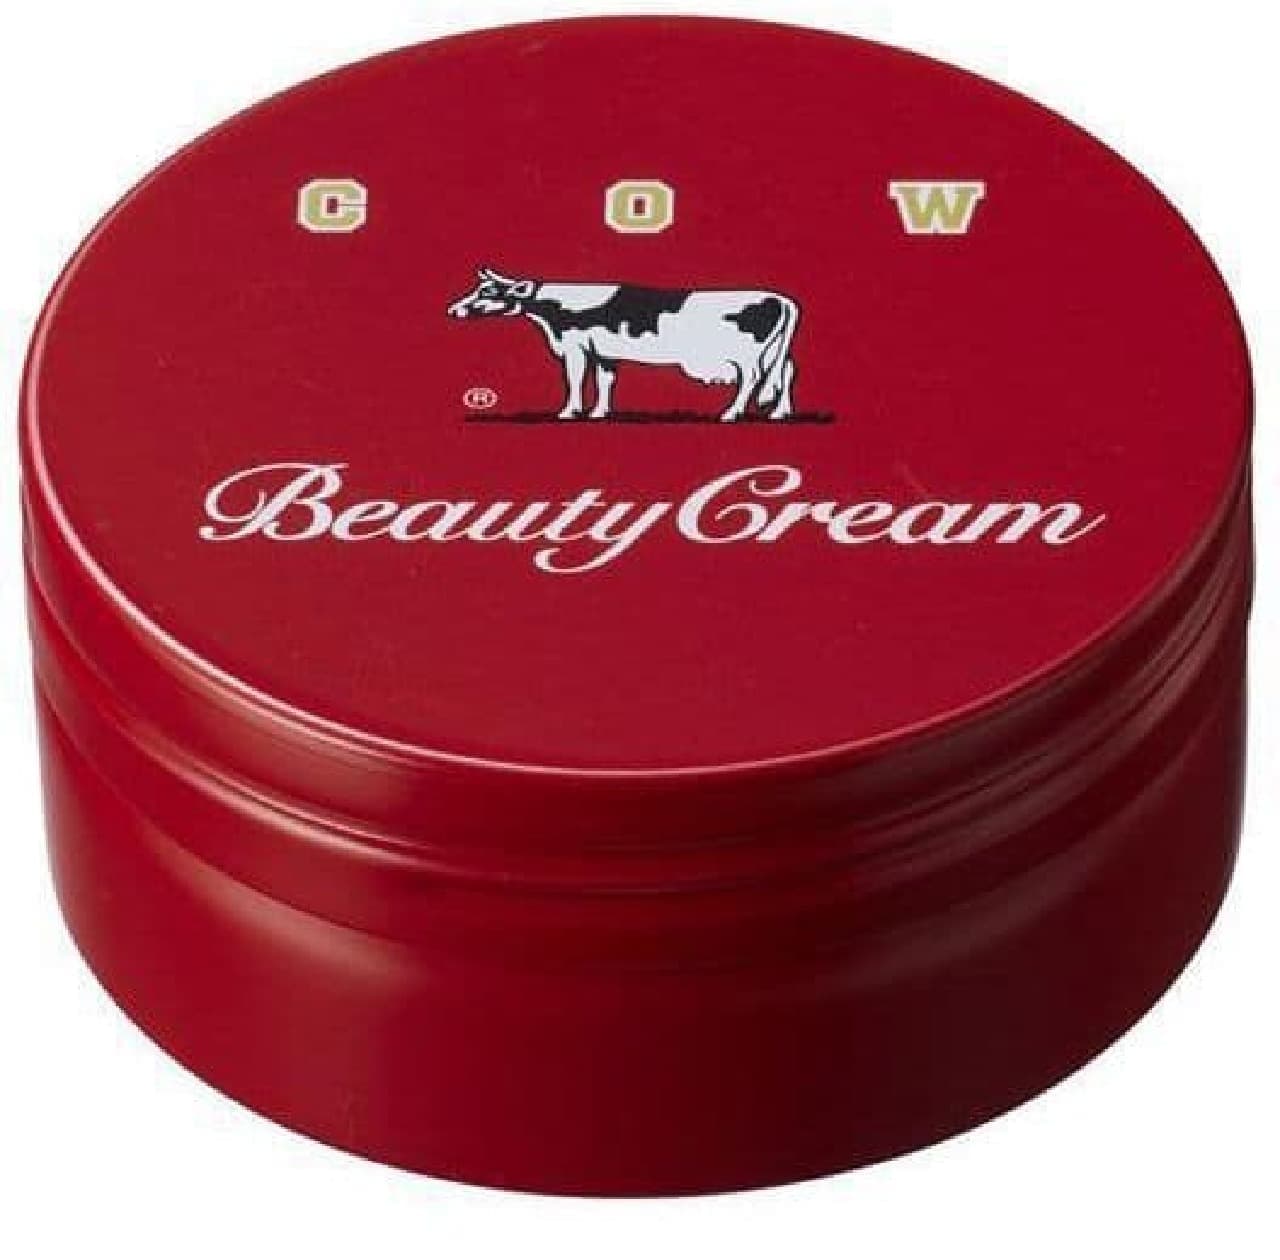 Cow Brand Red Box Beauty Cream 80g